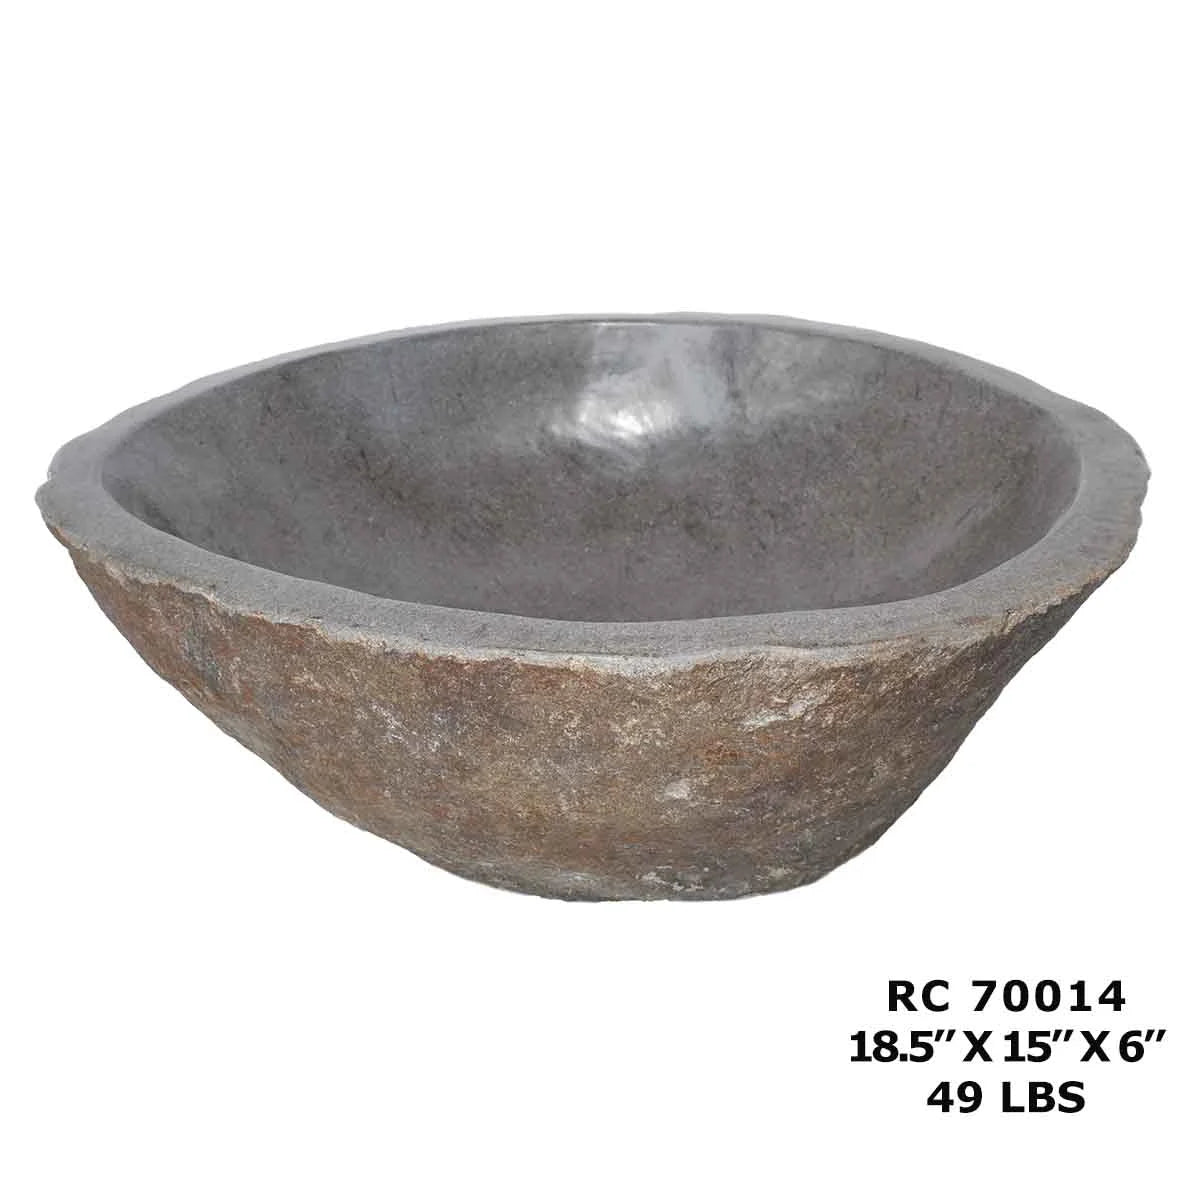 RC70014-Rock Vessel Sink | Natural River Stone Sink for Bathroom